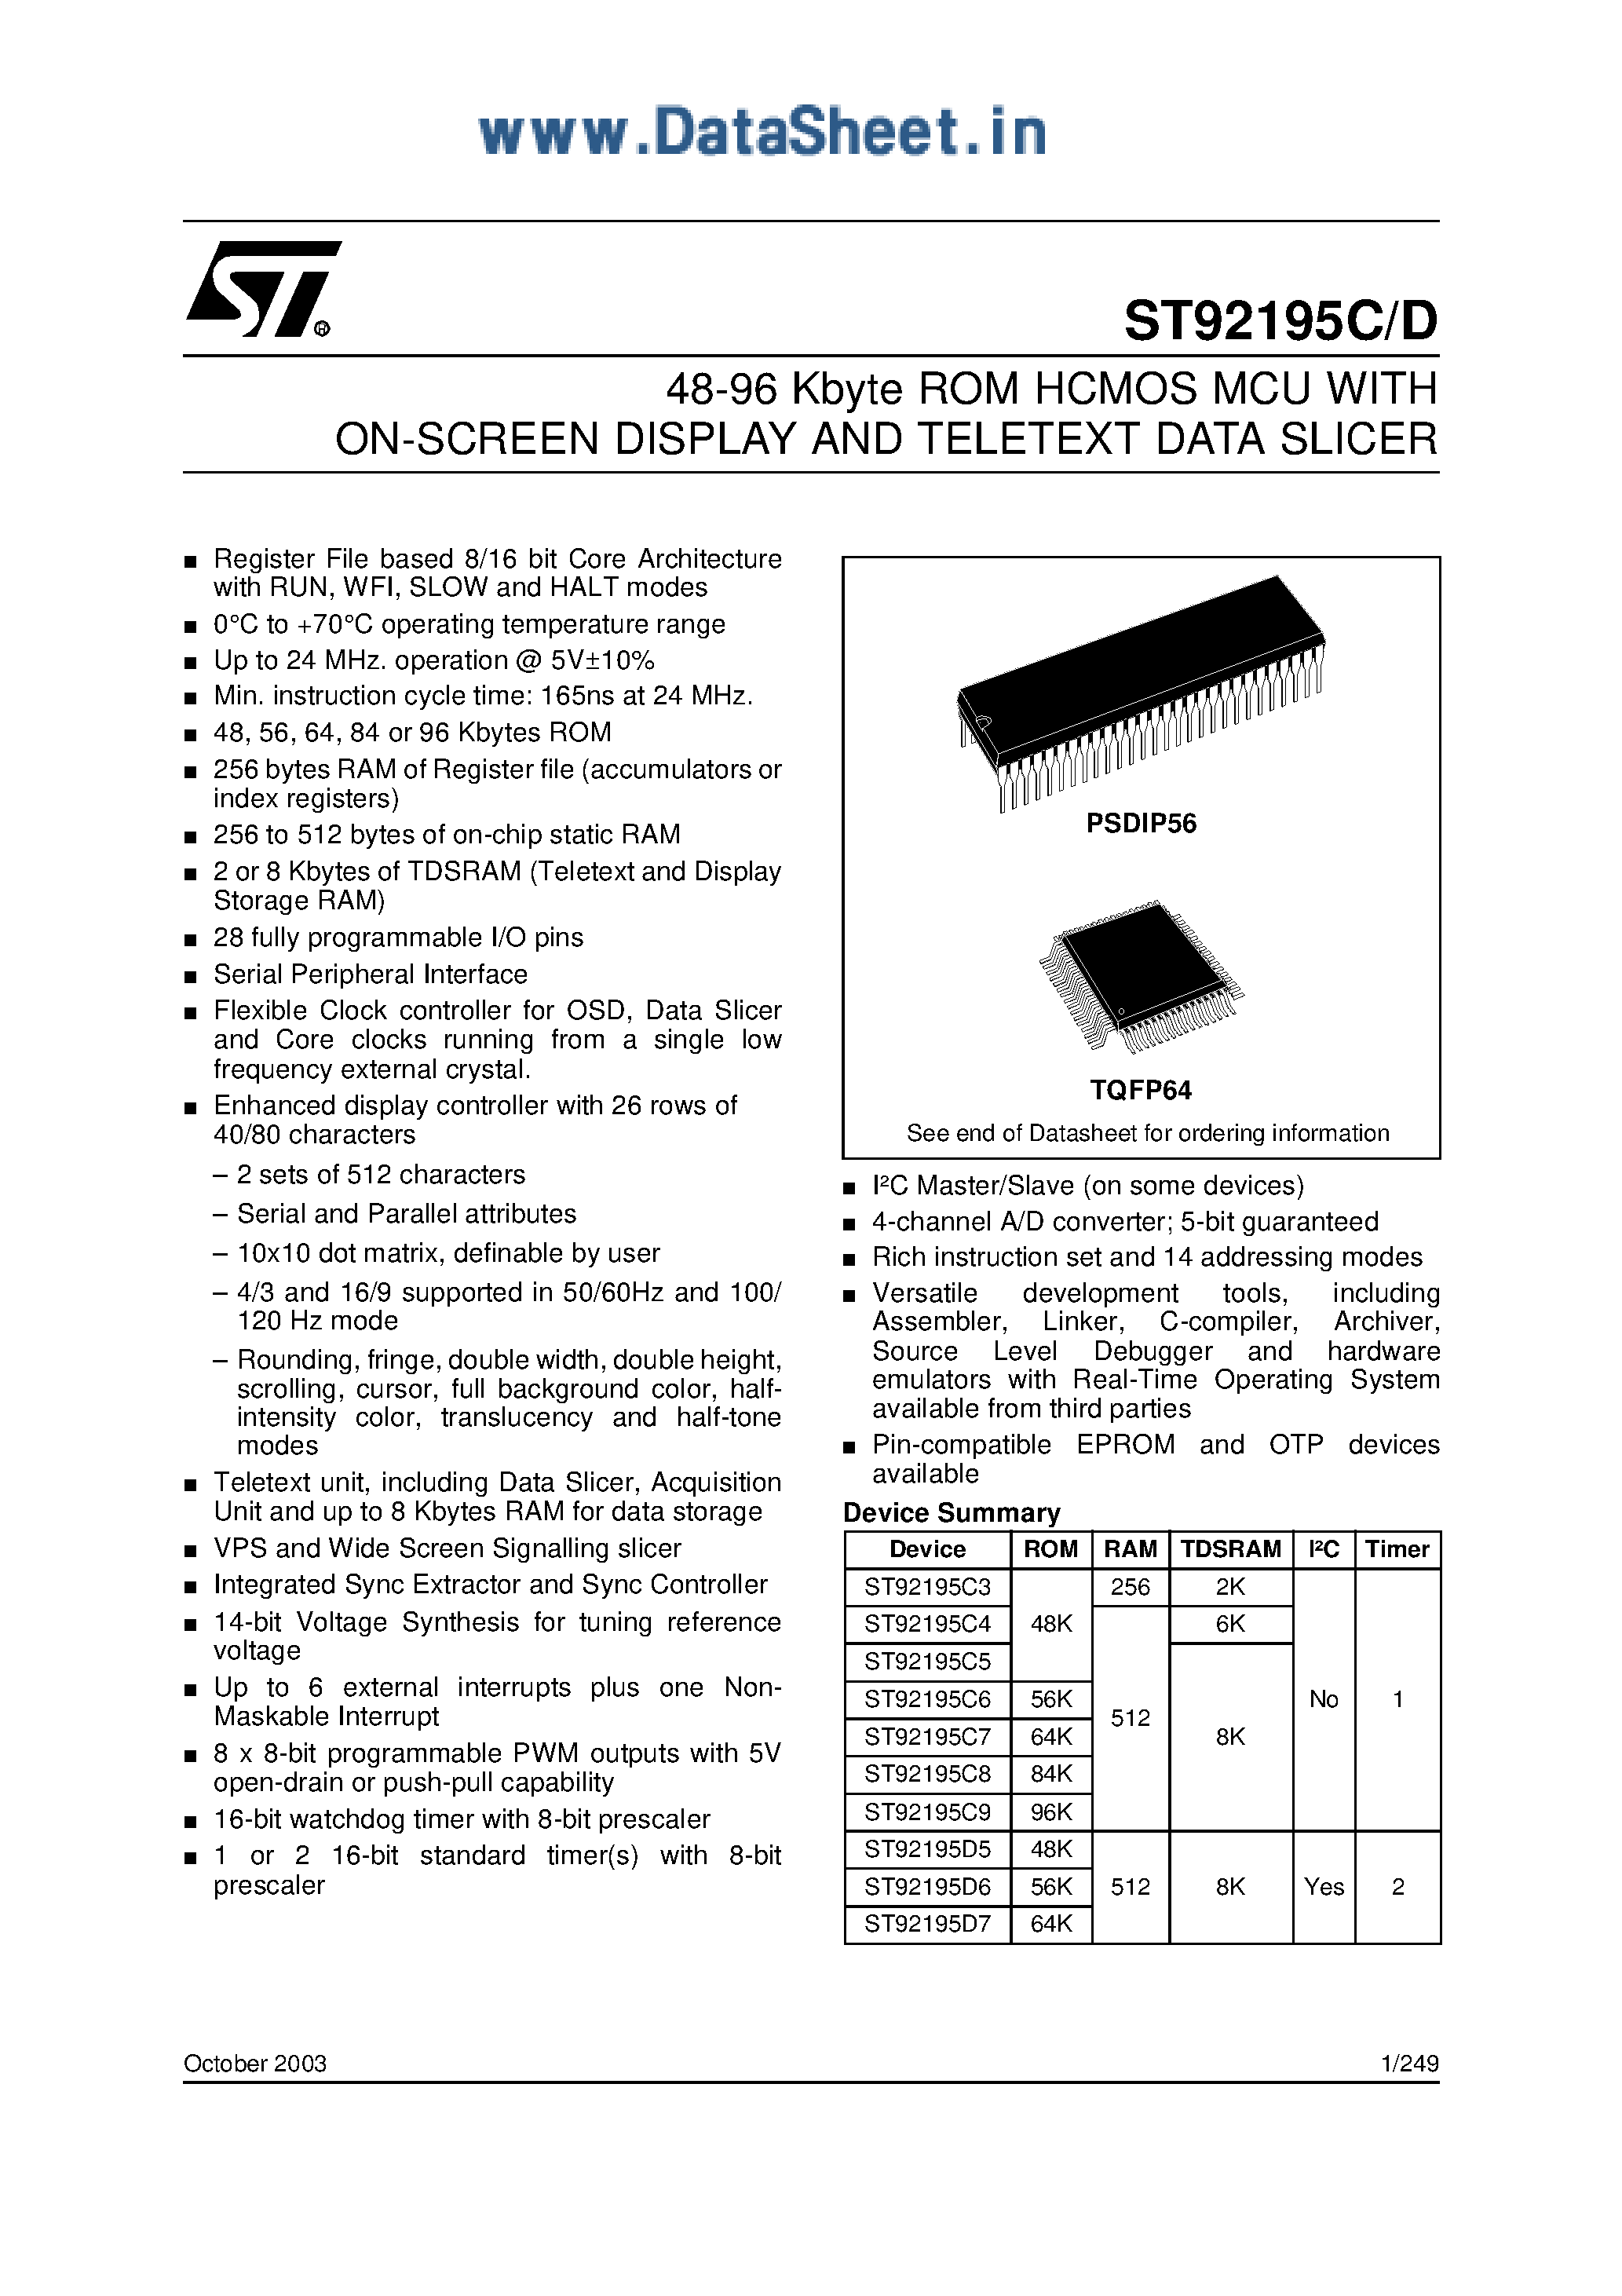 Datasheet ST92195C - (ST92195C/D) 48-96 Kbyte ROM HCMOS MCU page 1